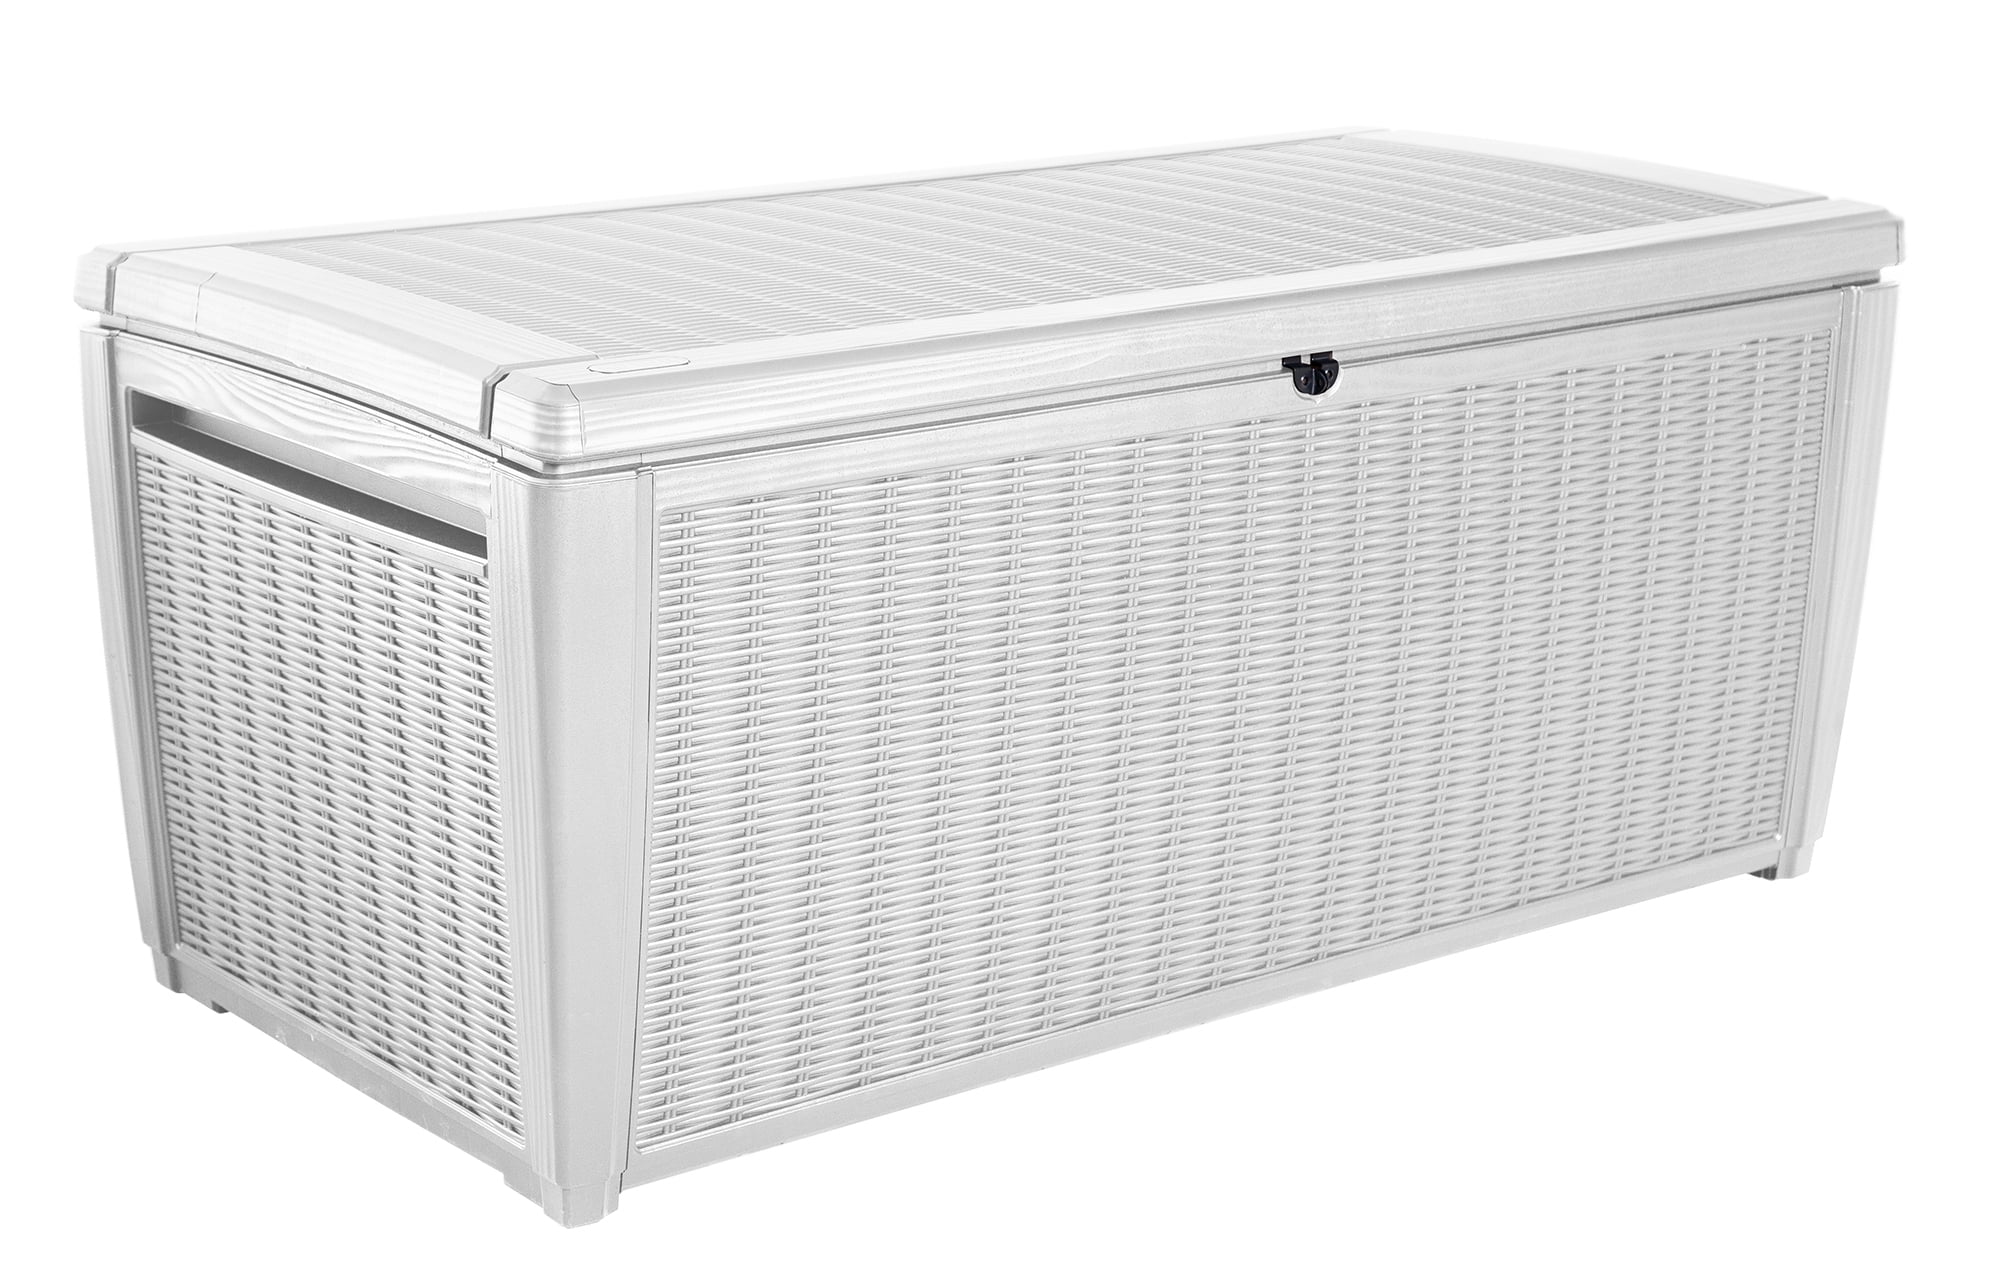 Keter Sumatra Deck Box With Pool Kit, Outdoor Patio Storage Bench White